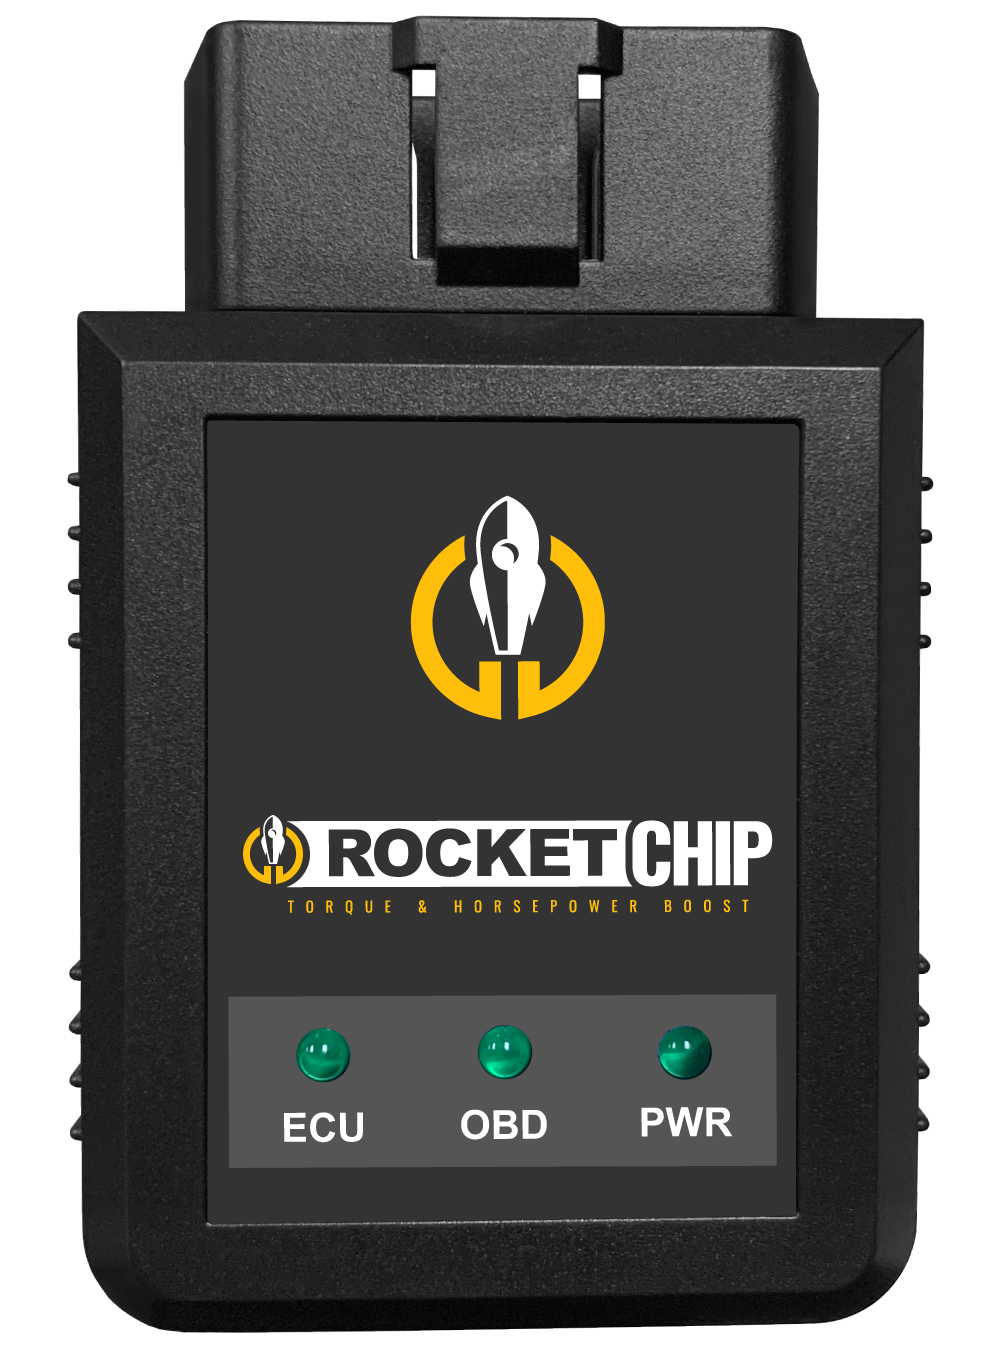 Rocket chip Boost+ performance chip, black in color